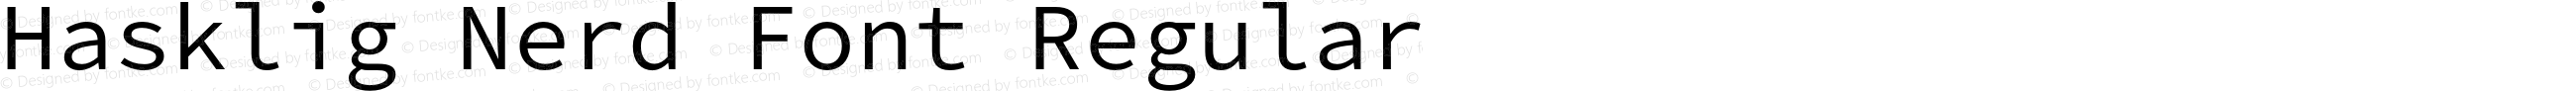 Hasklig Nerd Font Complete Mono